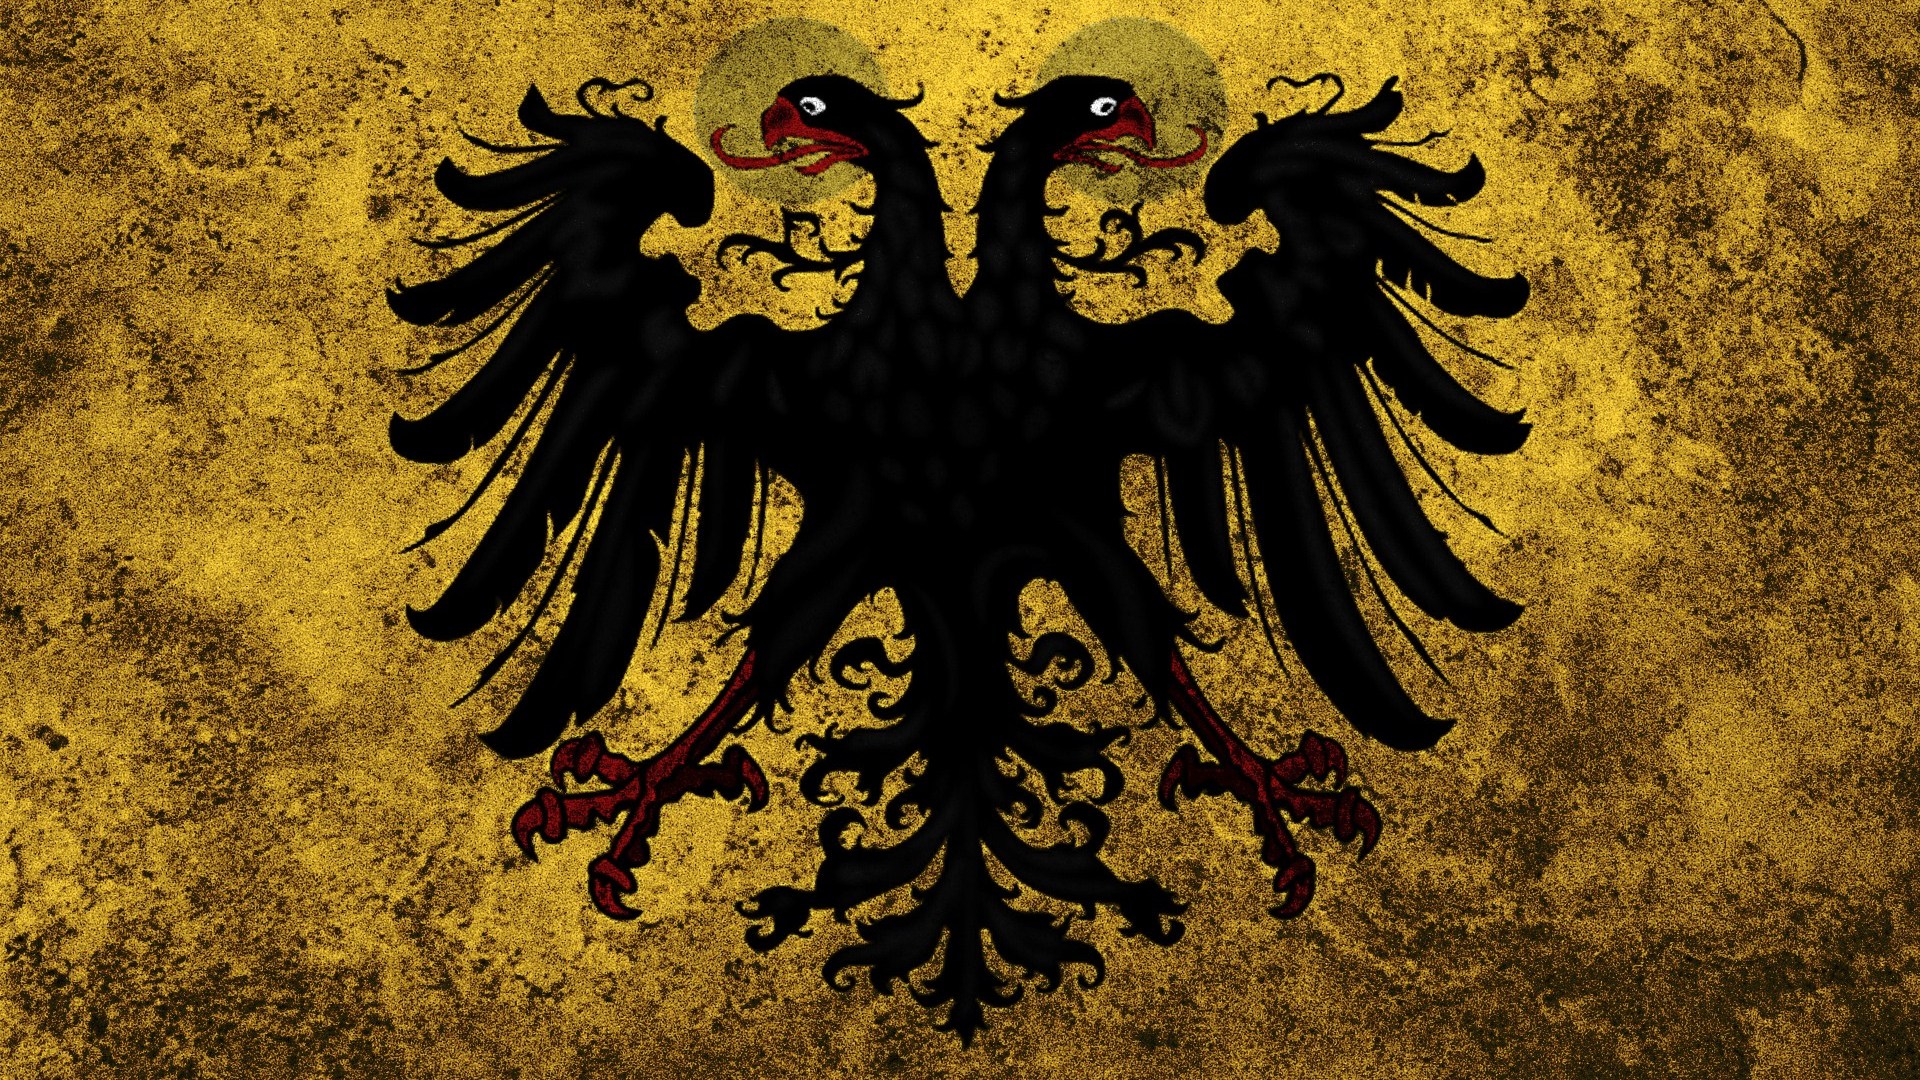 Holy-roman-empire-flag-digital-art-hd-wallpaper-1920x1080-5563.jpg